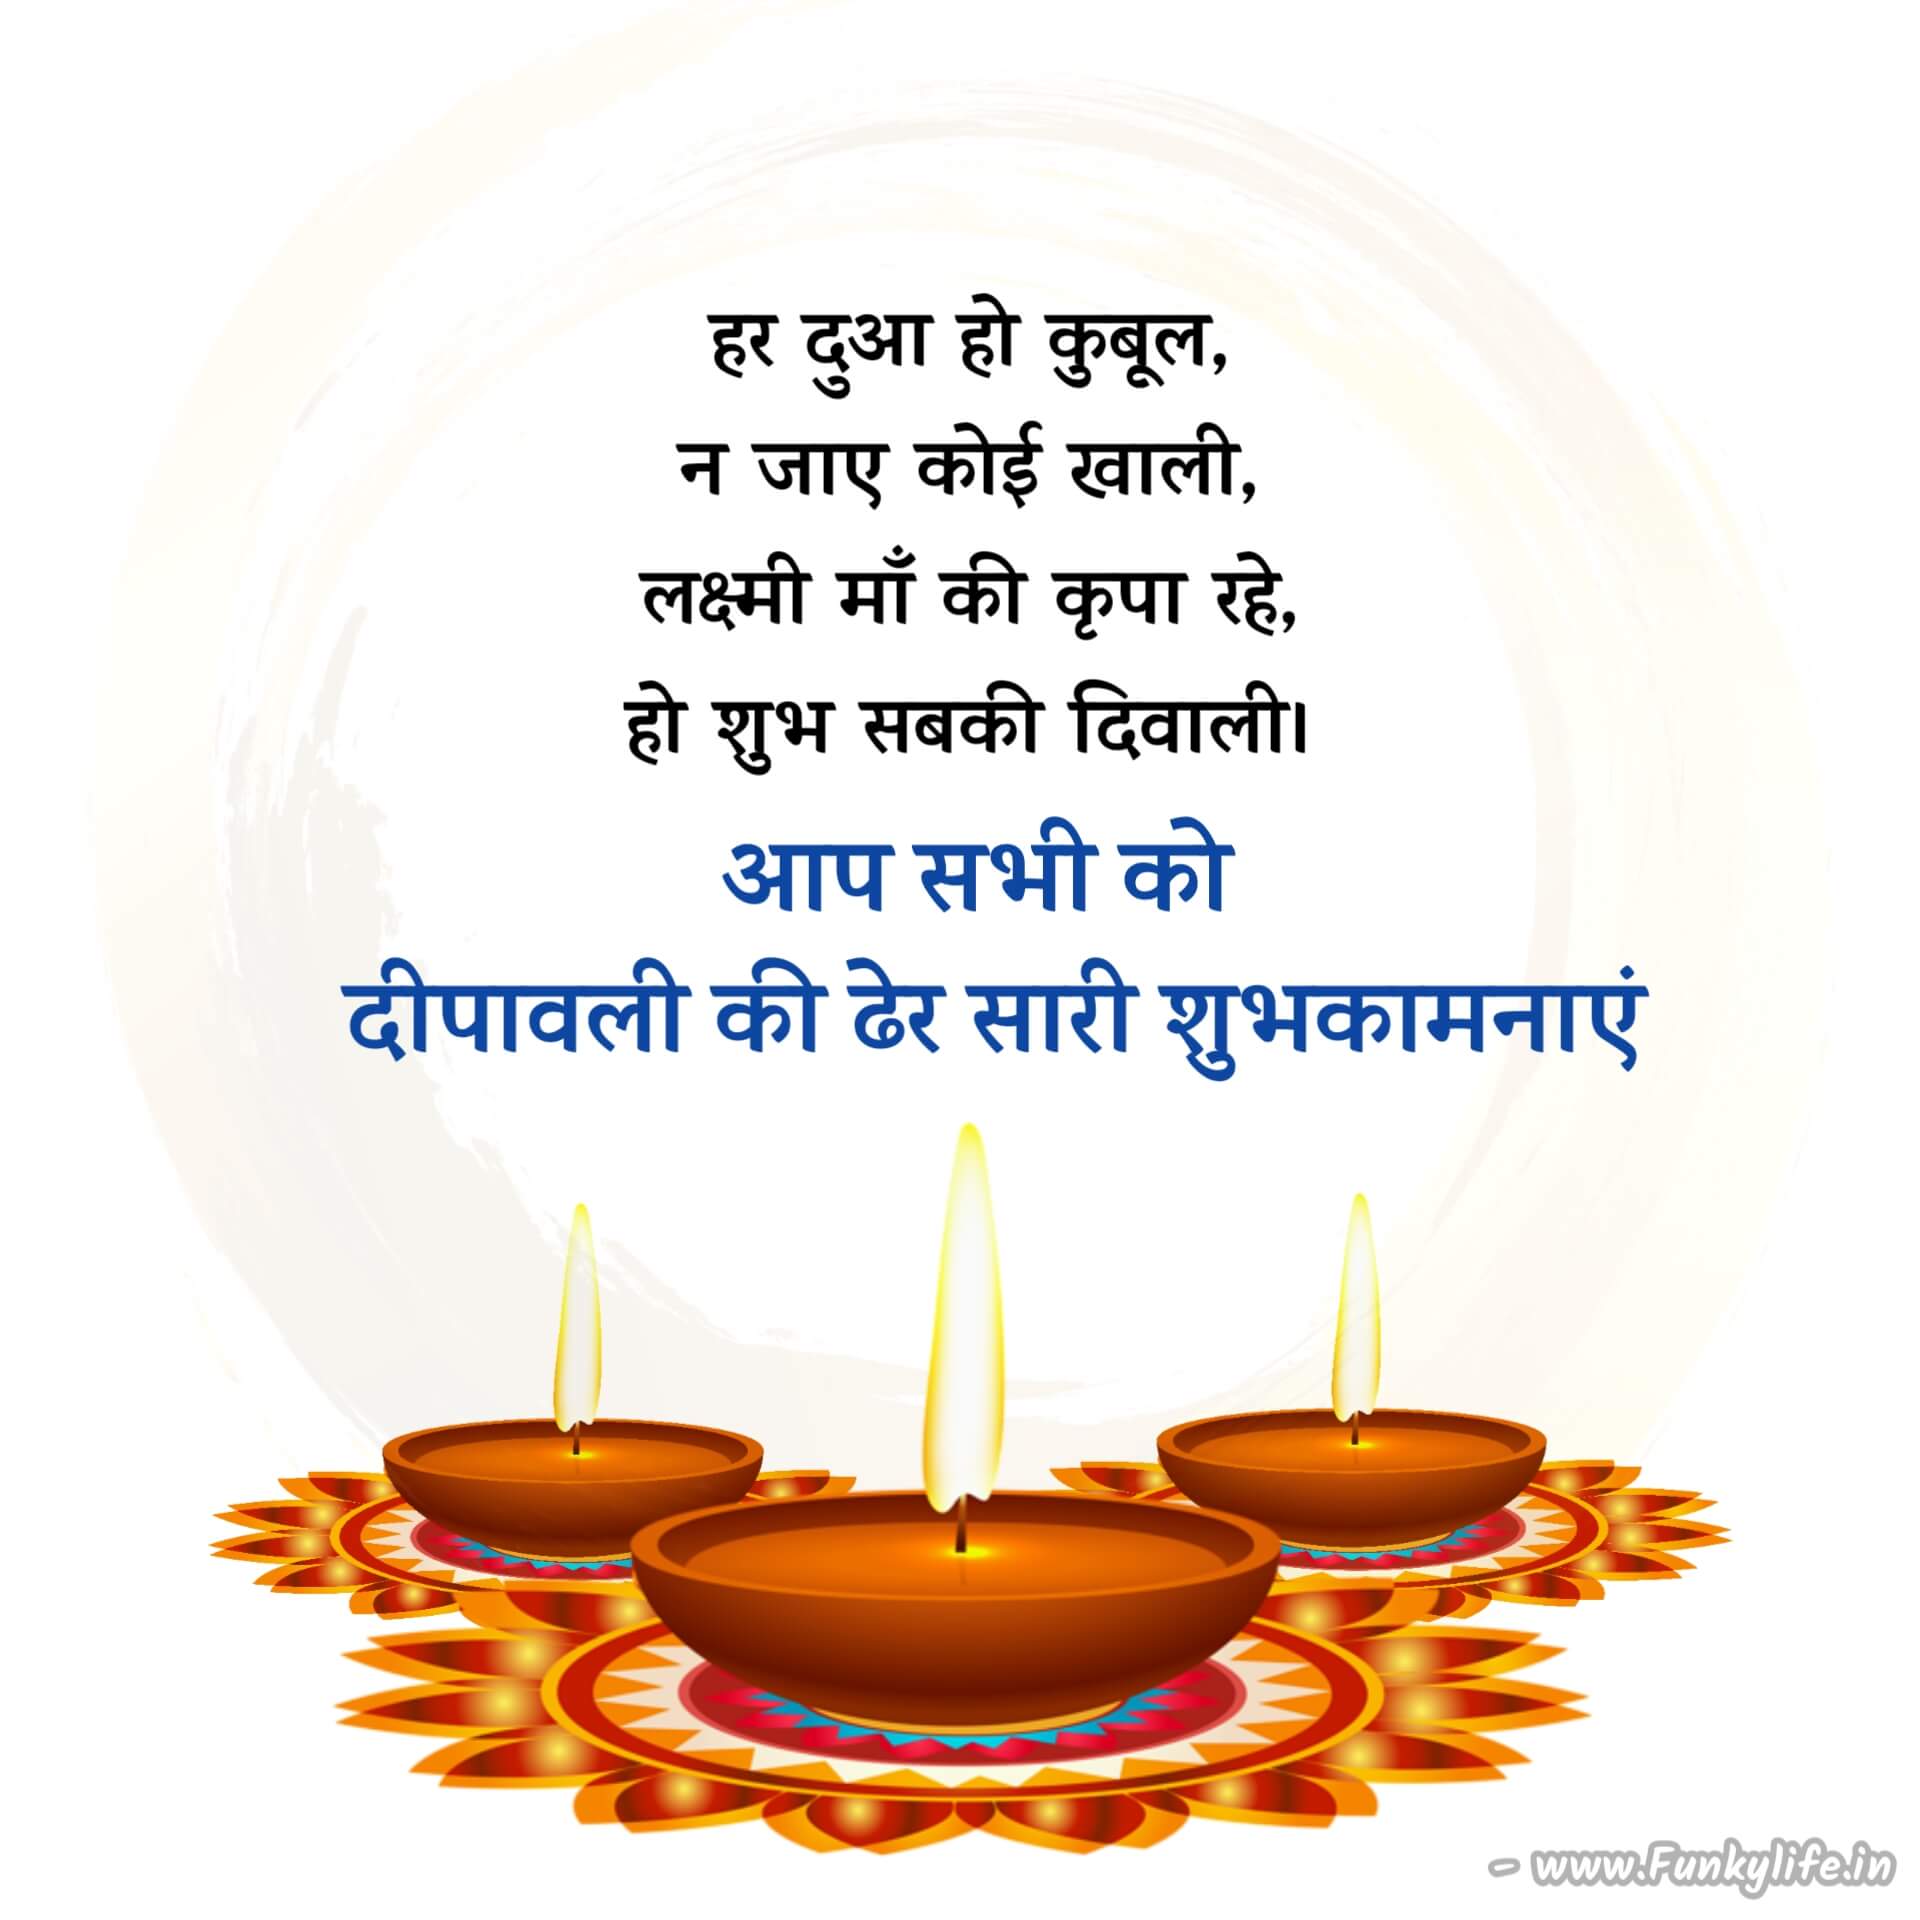 WhatsApp Diwali Wishes in Hindi